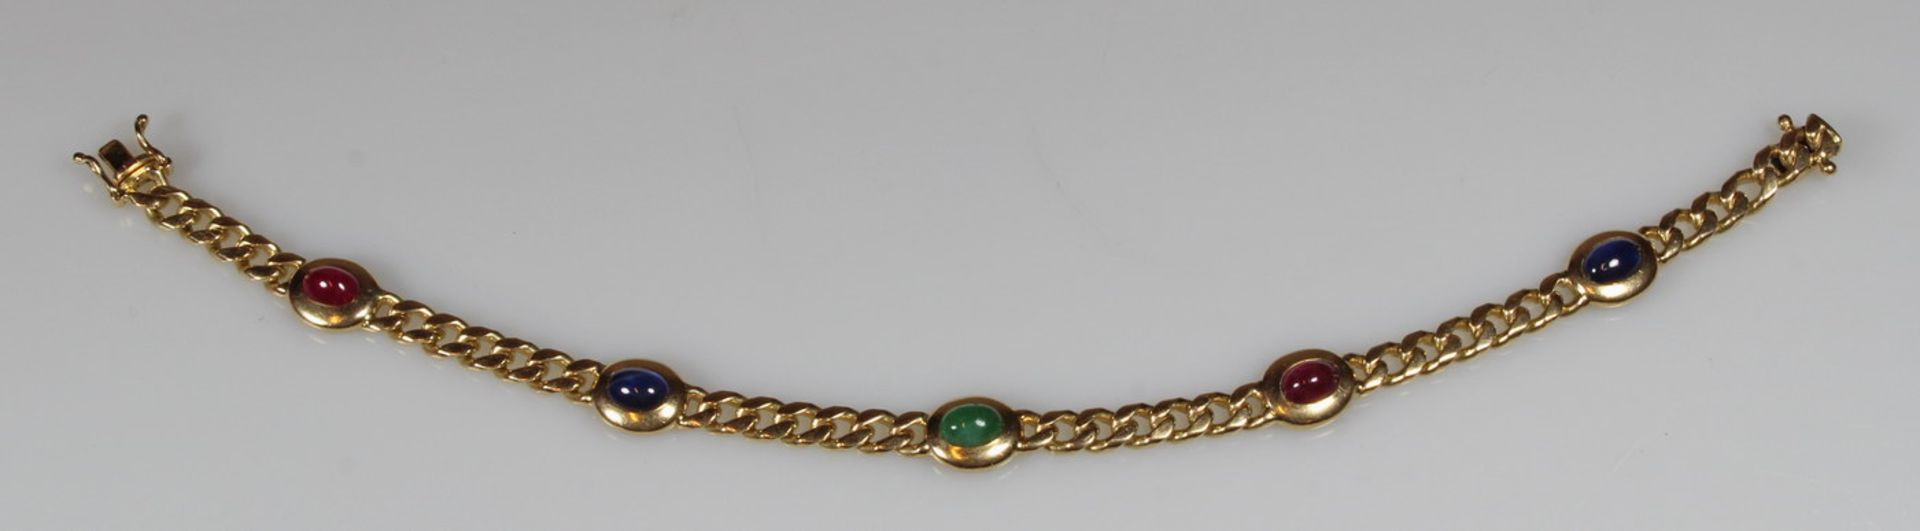 Armband, GG 585, 2 Rubin-, 2 Saphir-, 1 Smaragd-Cabochon, 20 cm lang, 20 g